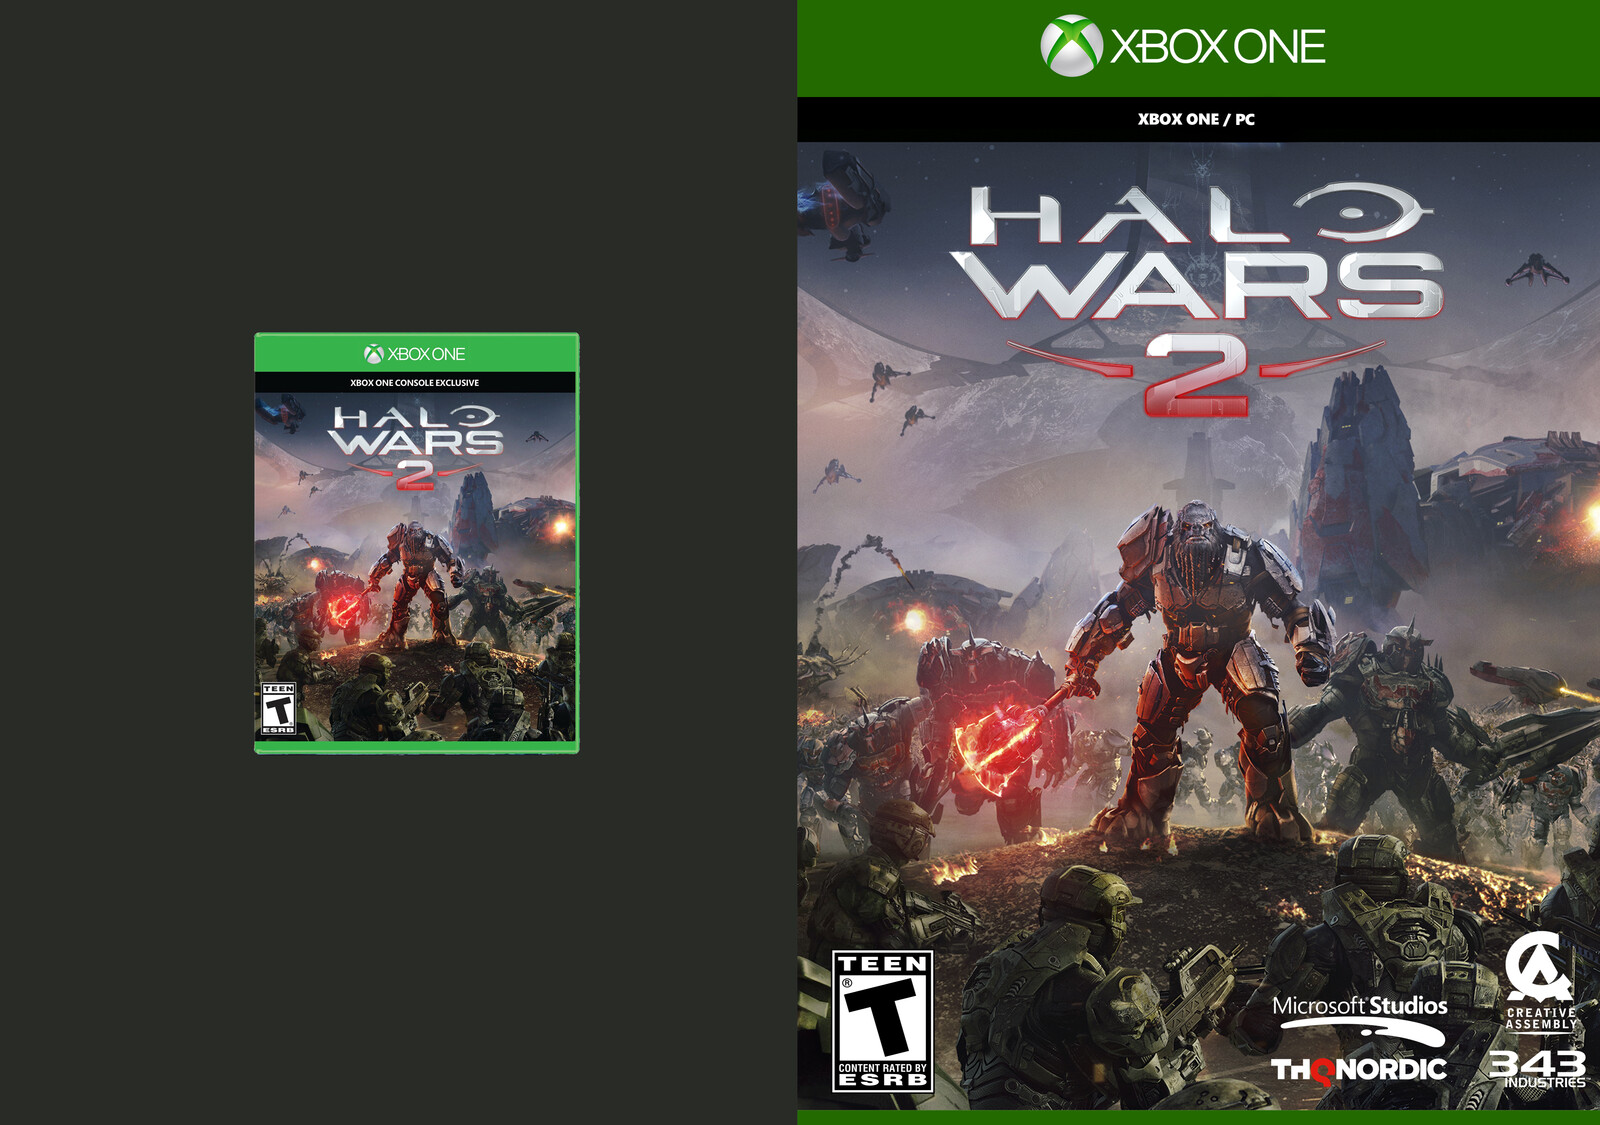 Halo Wars 2 (original scan cover vs. upscaled)